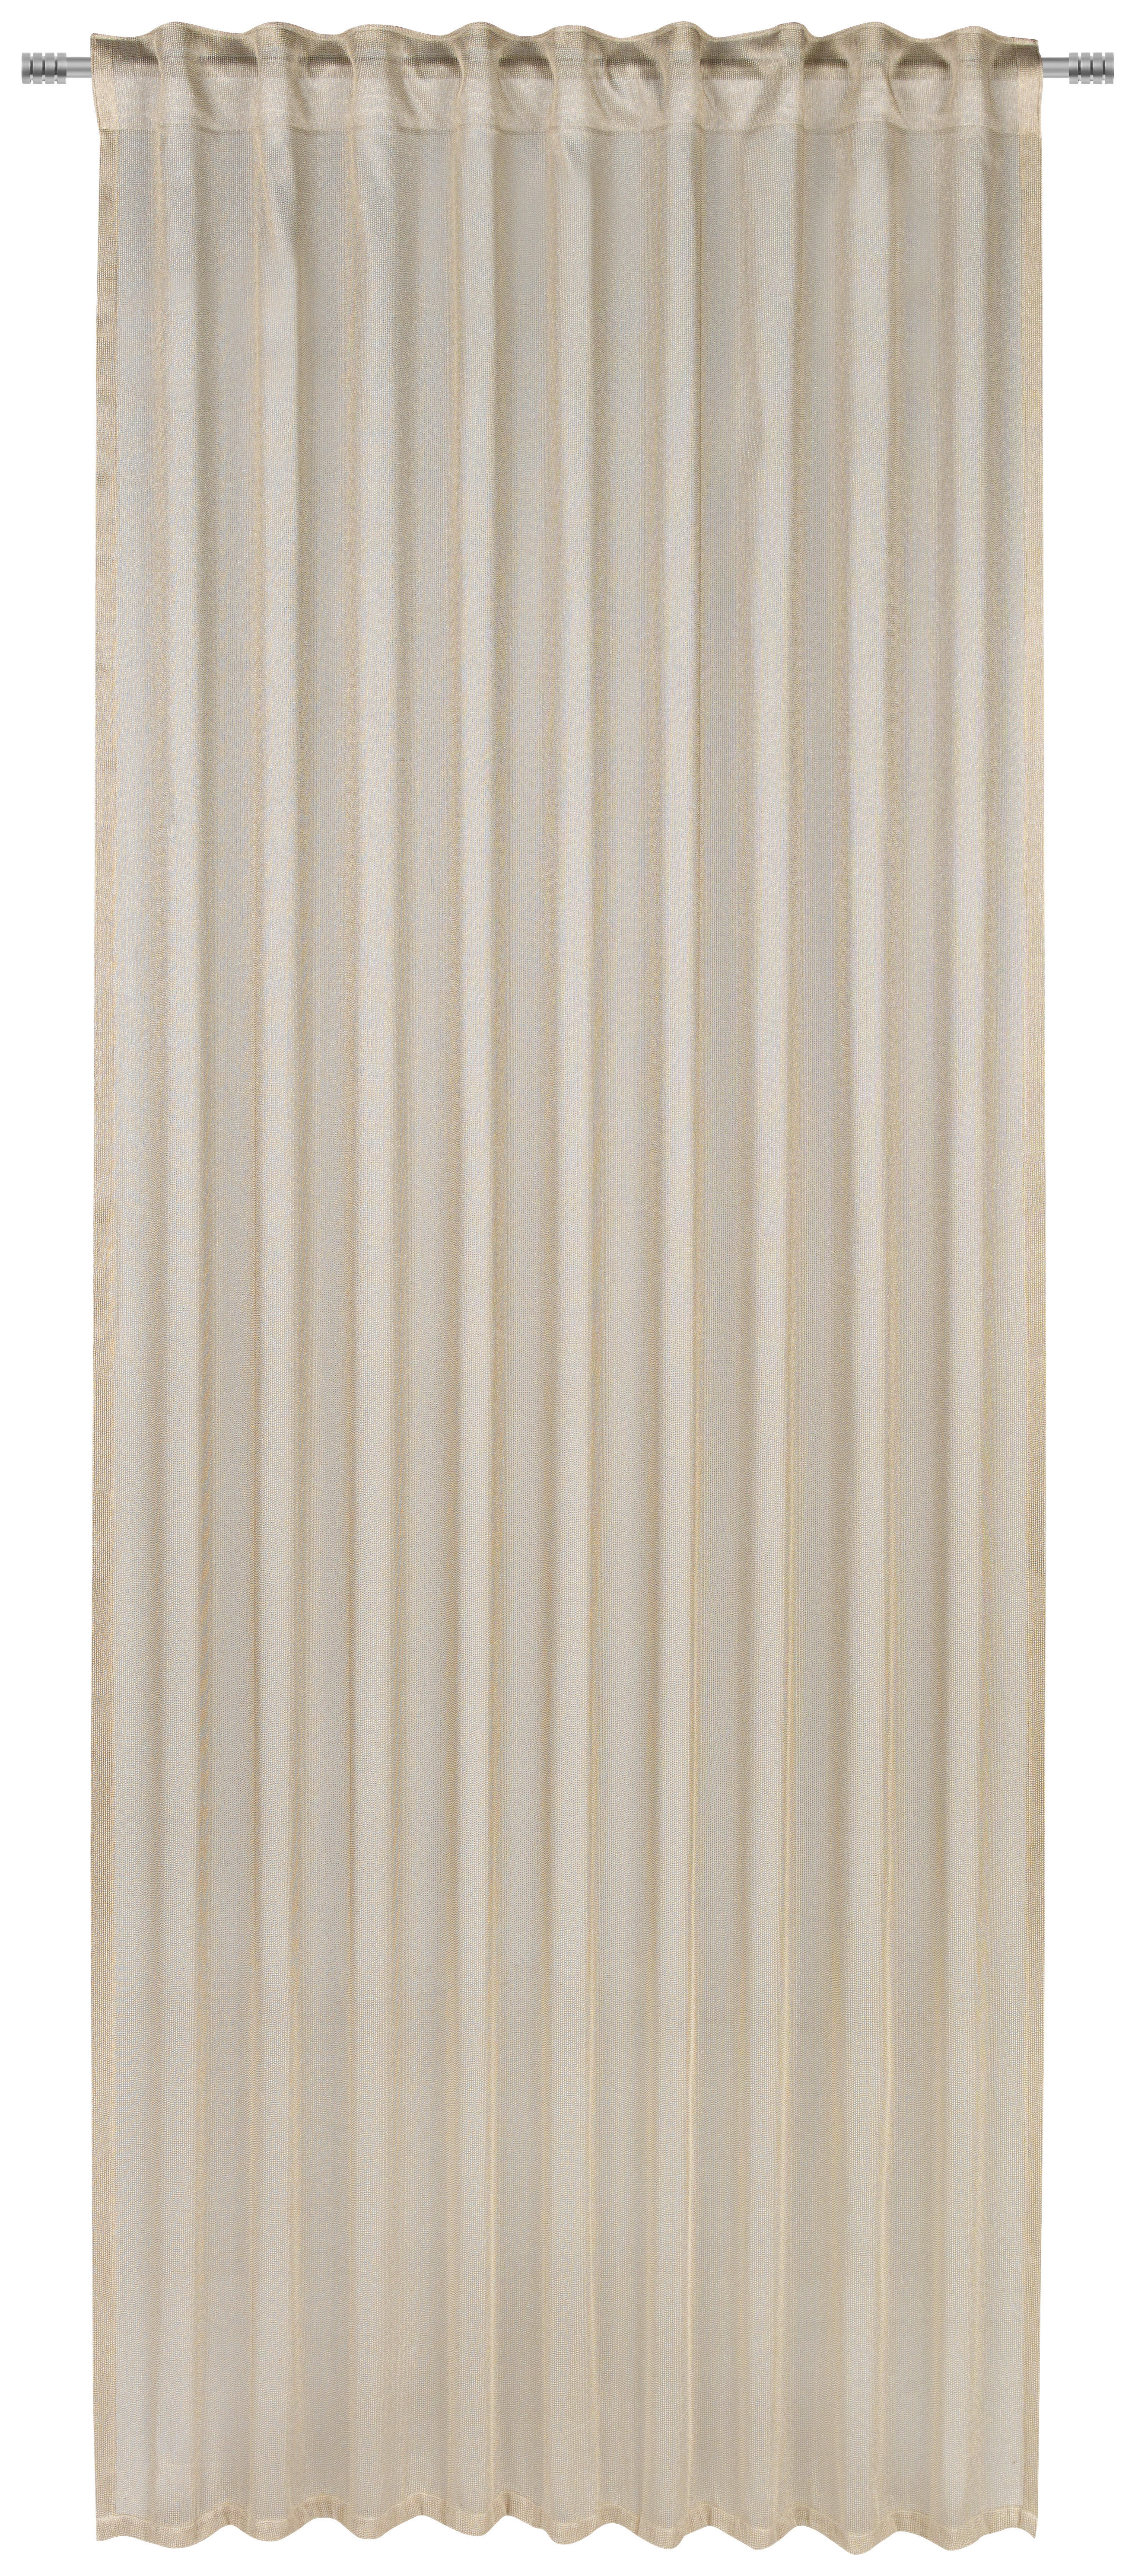 HOTELLGARDIN transparent  - beige, Basics, textil (140/245cm) - Esposa